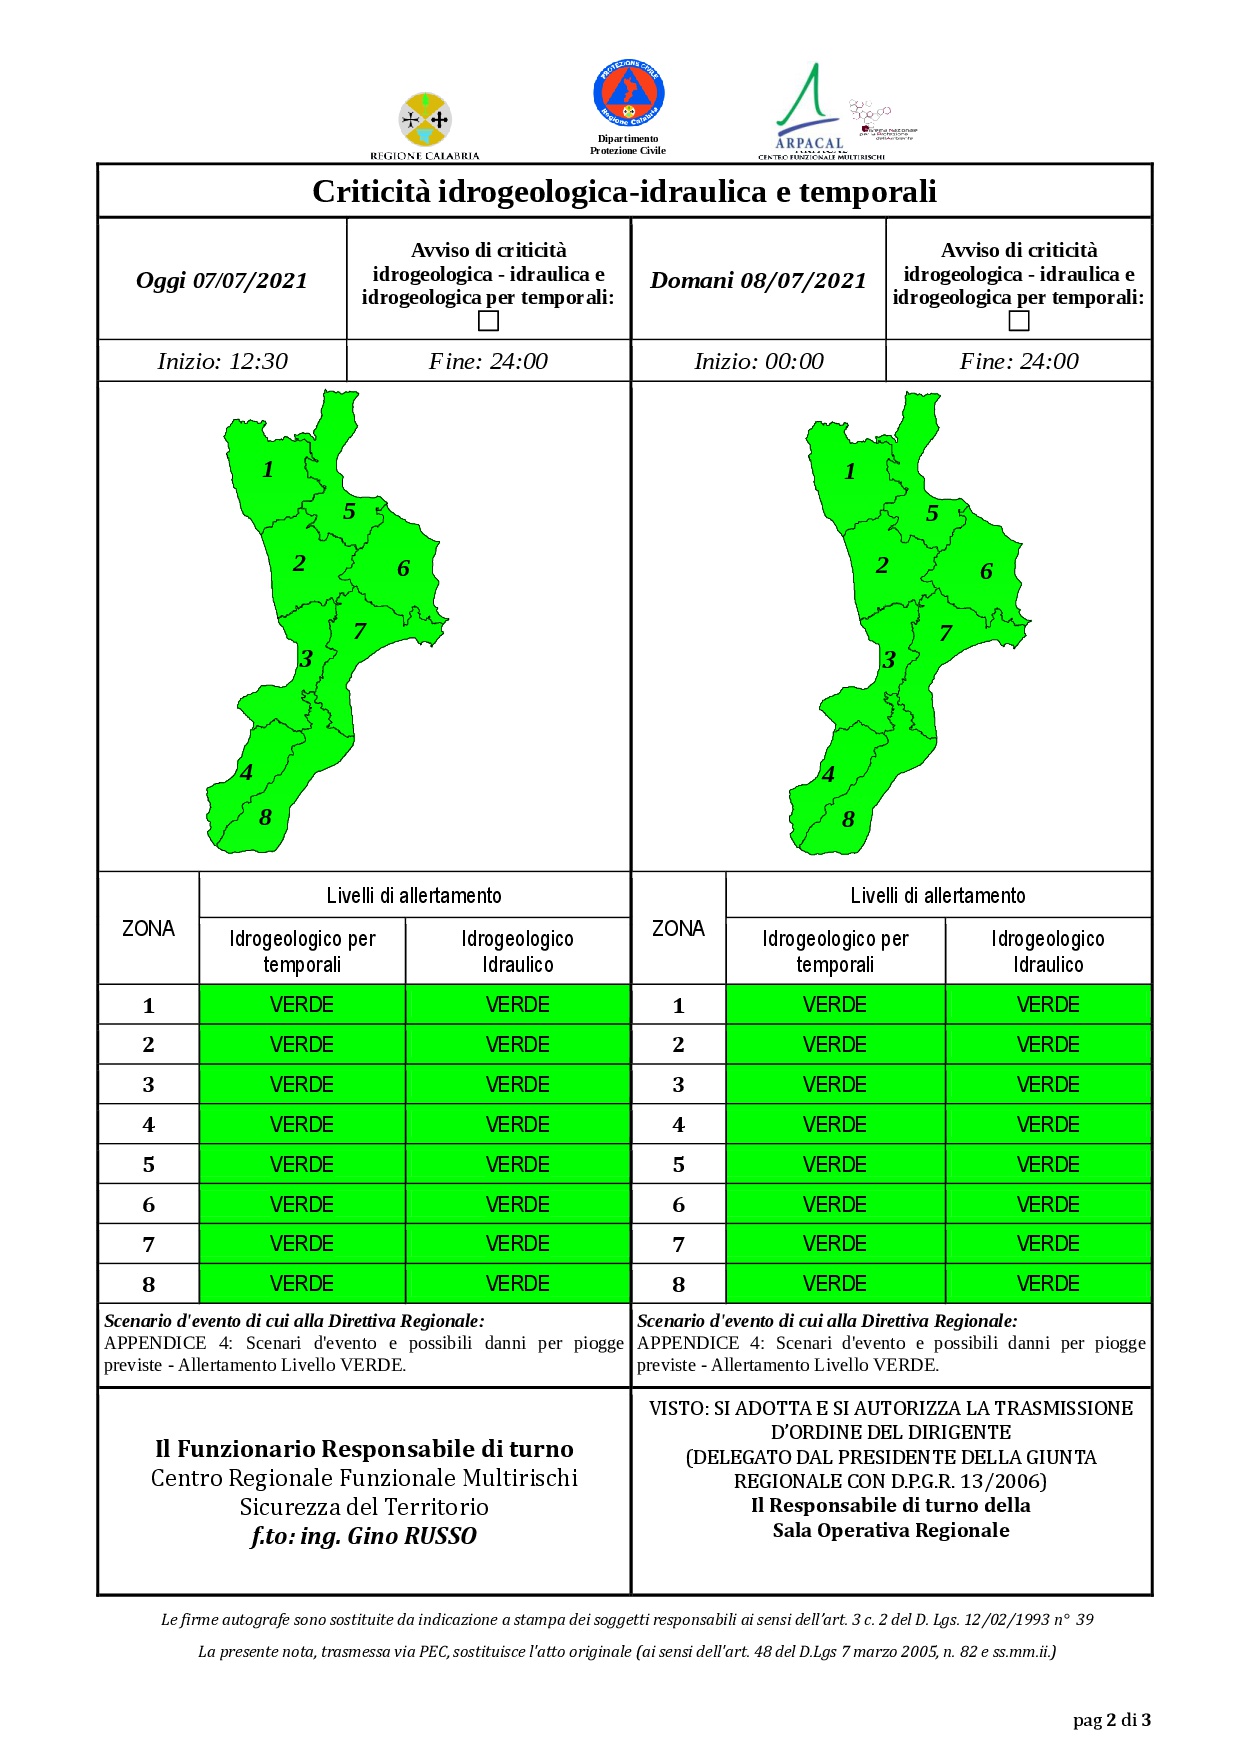 Criticità idrogeologica-idraulica e temporali in Calabria 07-07-2021